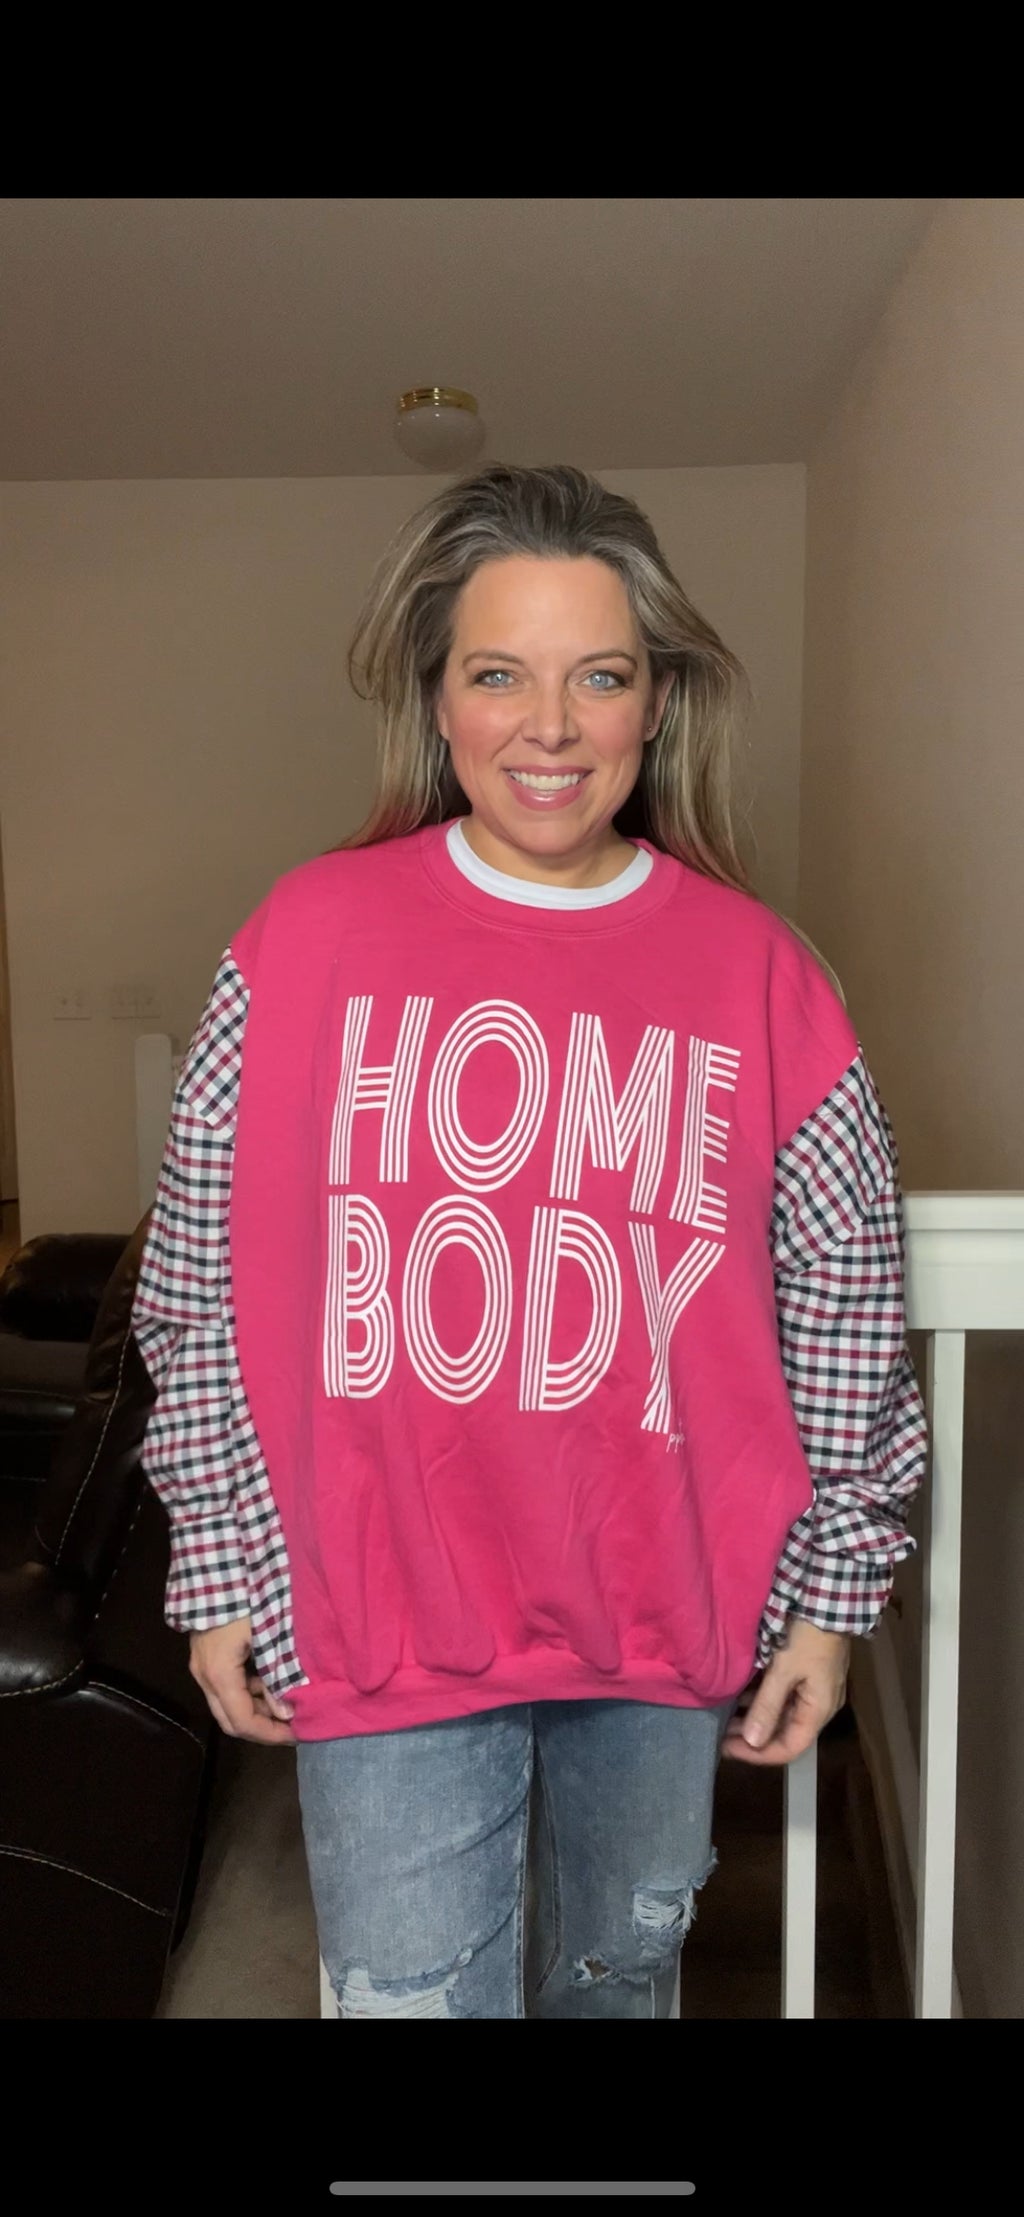 Homebody – women’s 1X – thin sweatshirt with thick cotton sleeve